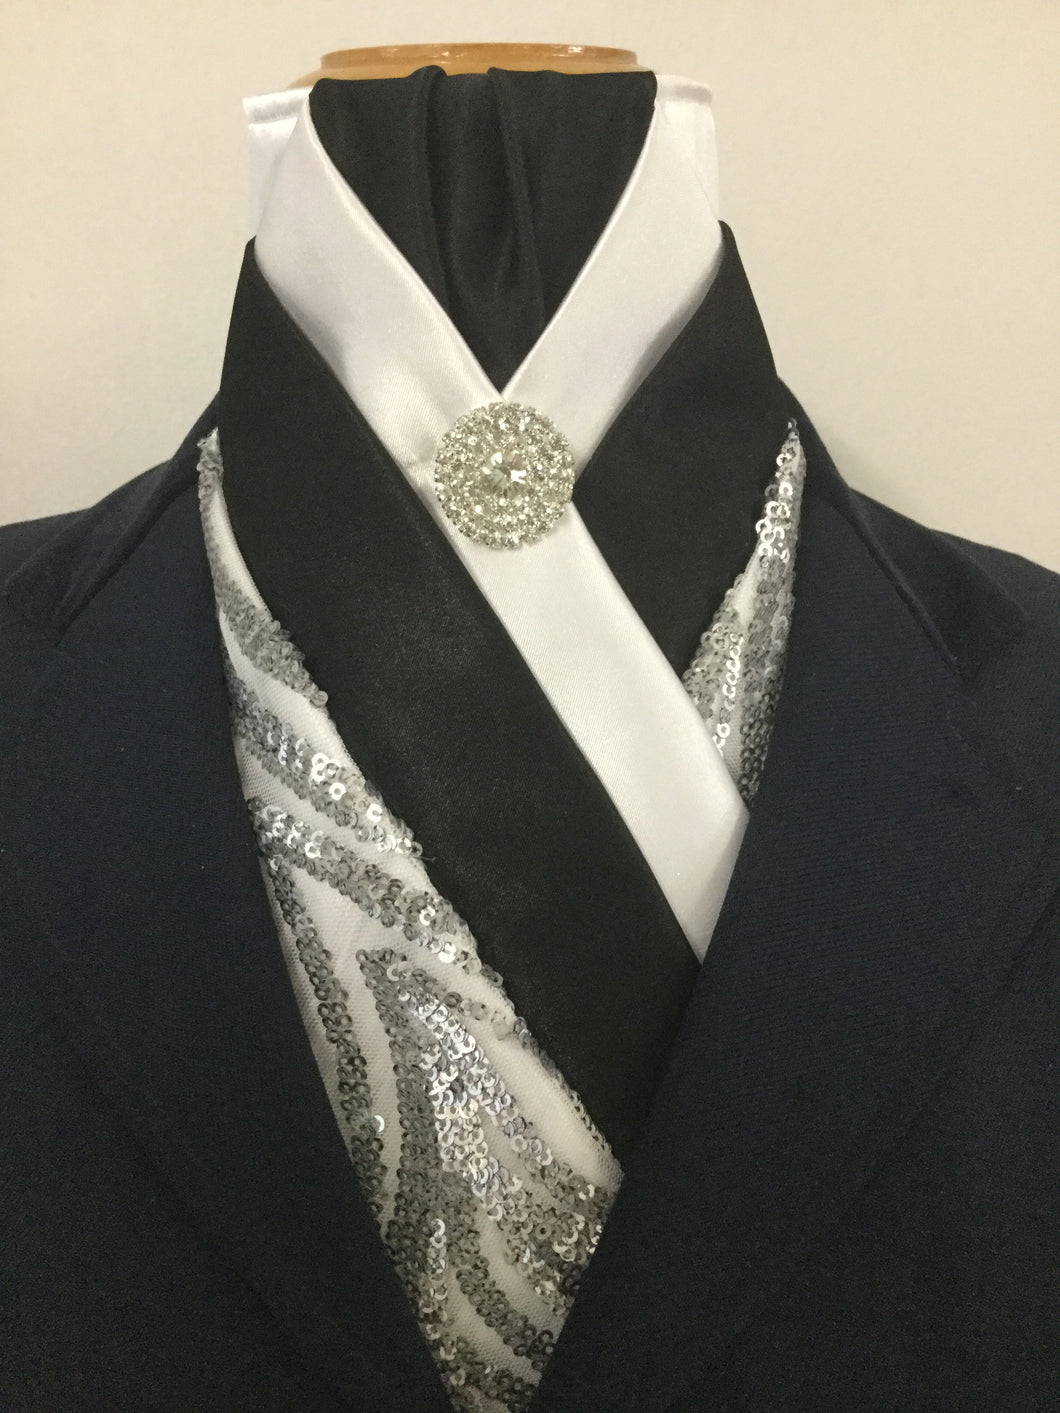 HHD 'Bella' White & Black Satin Pretied Stock Tie with Metalic Sequins